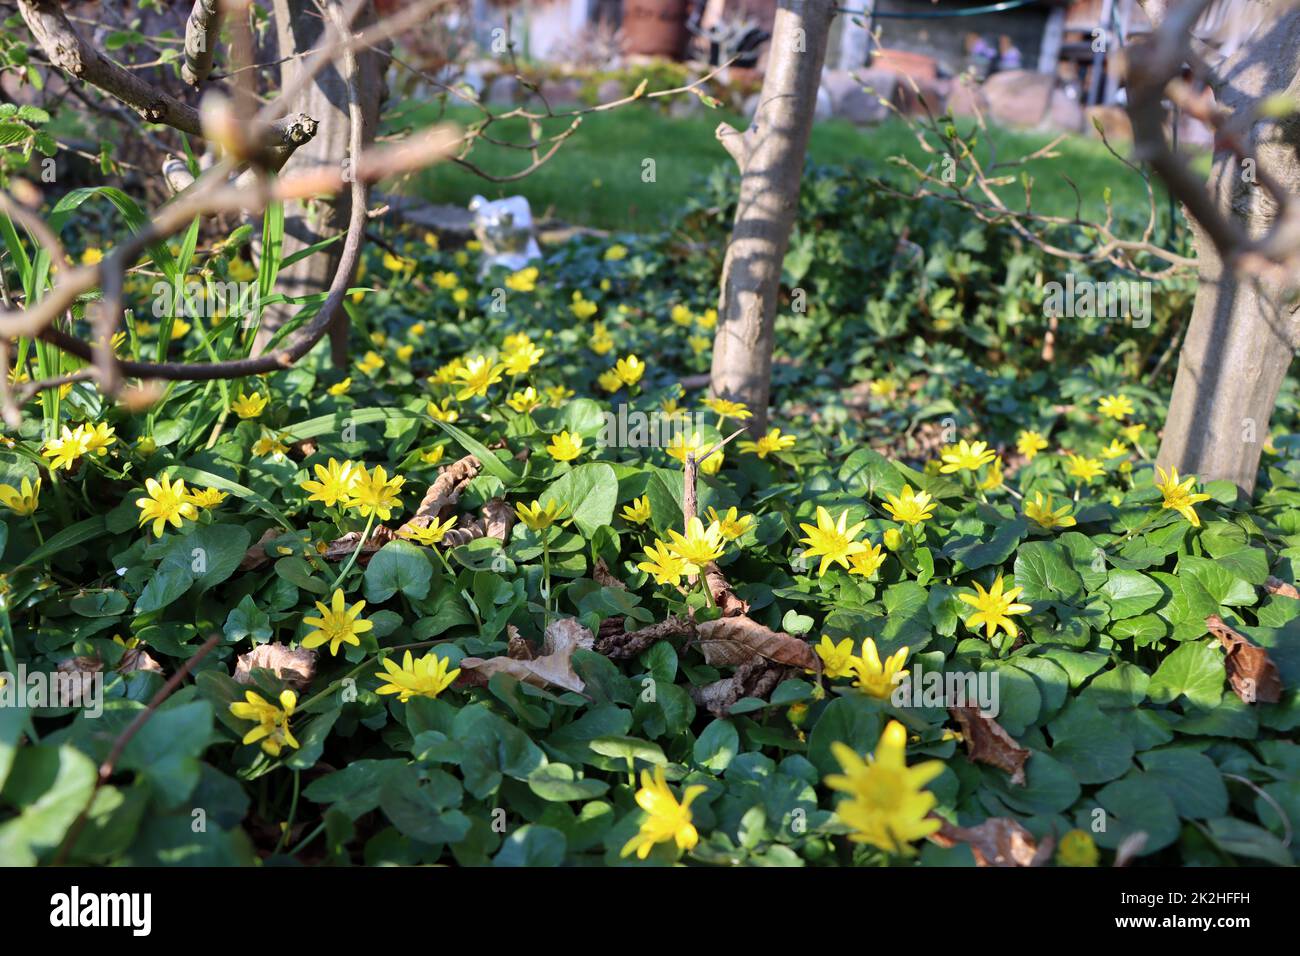 Scharbockskraut, Scharbocks-Kraut, Feigwurz oder FrÃ¼hlings-Scharbockskraut (Ranunculus ficaria, Ficaria verna) Stock Photo